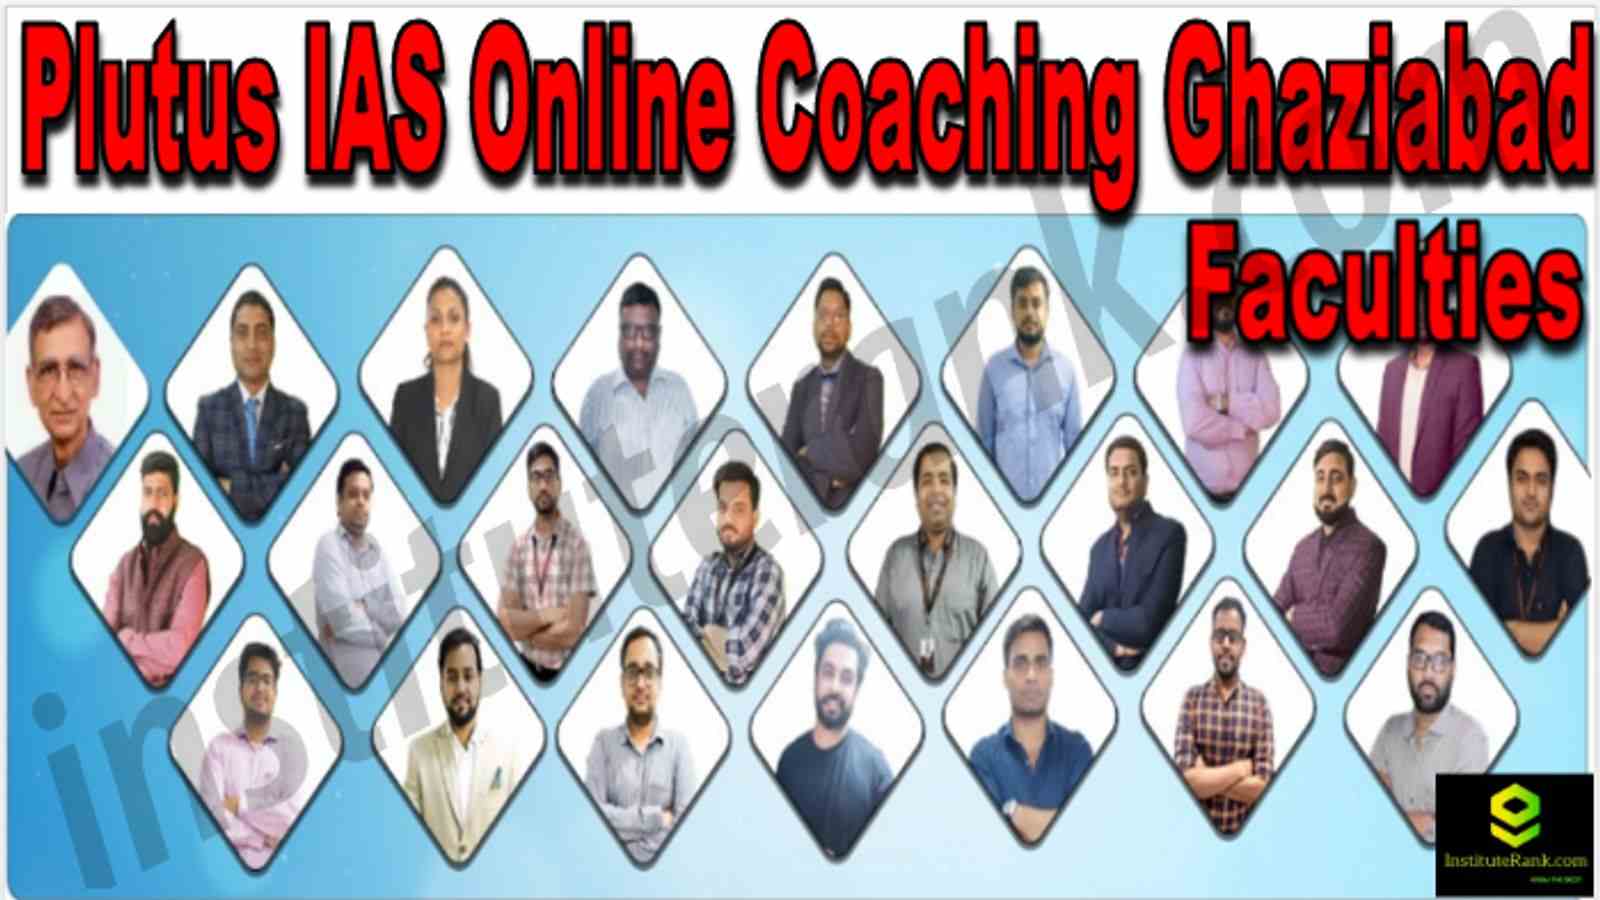 Plutus IAS Online Coaching Ghaziabad Reviews Faculties